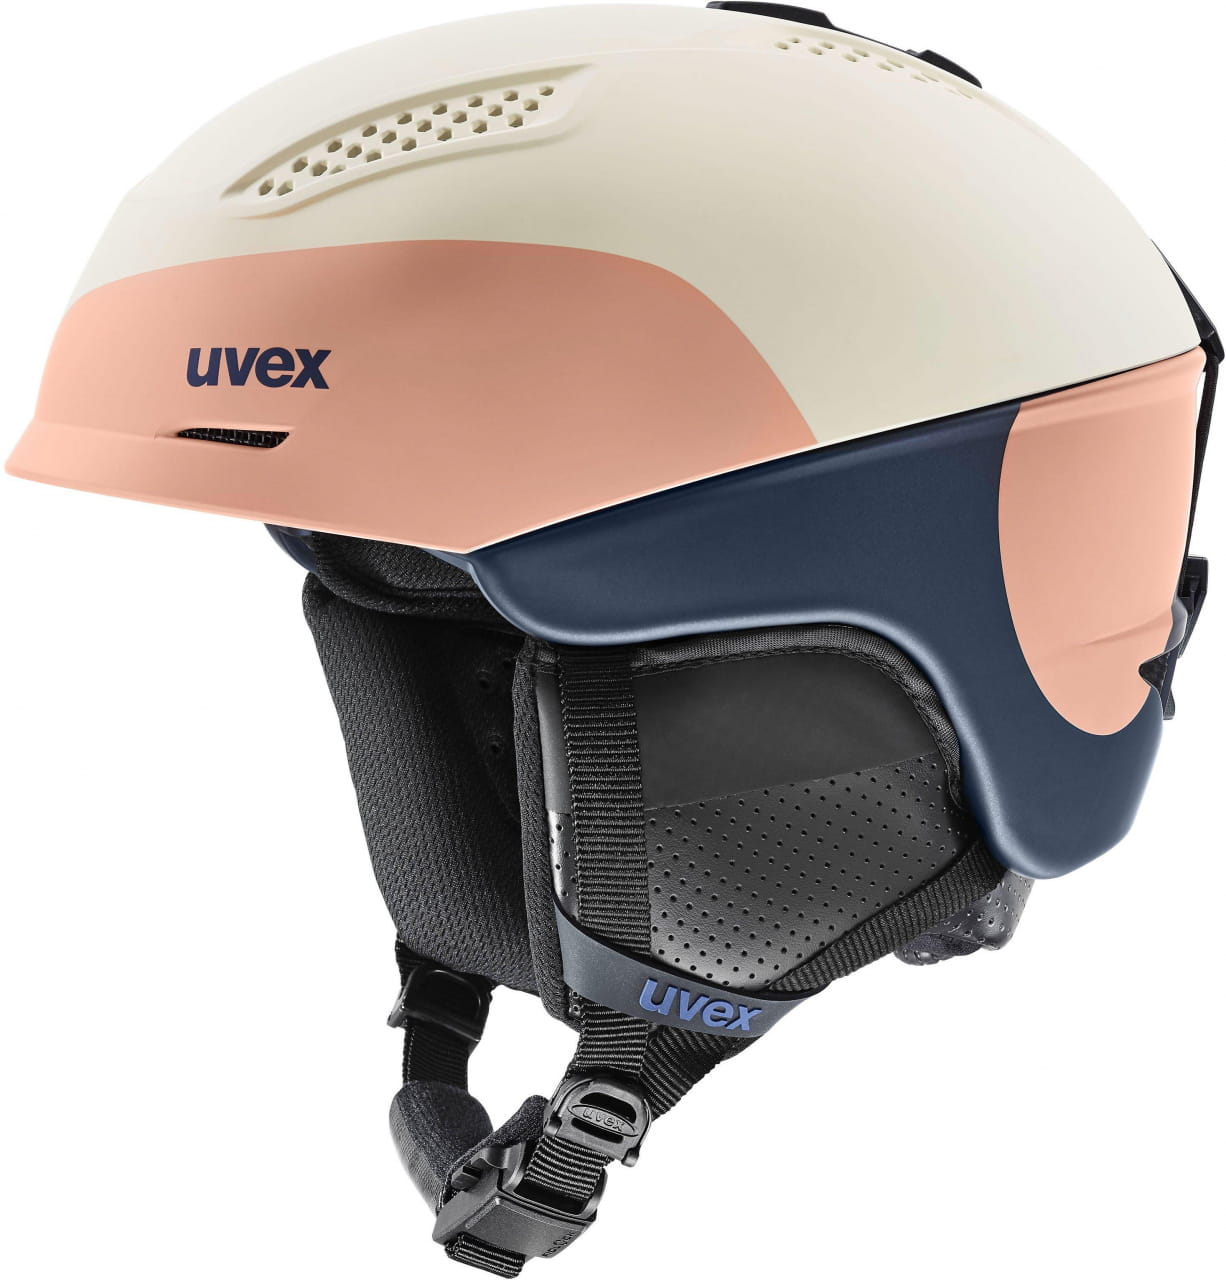 Casco de esquí para señoras Uvex Ultra Pro W